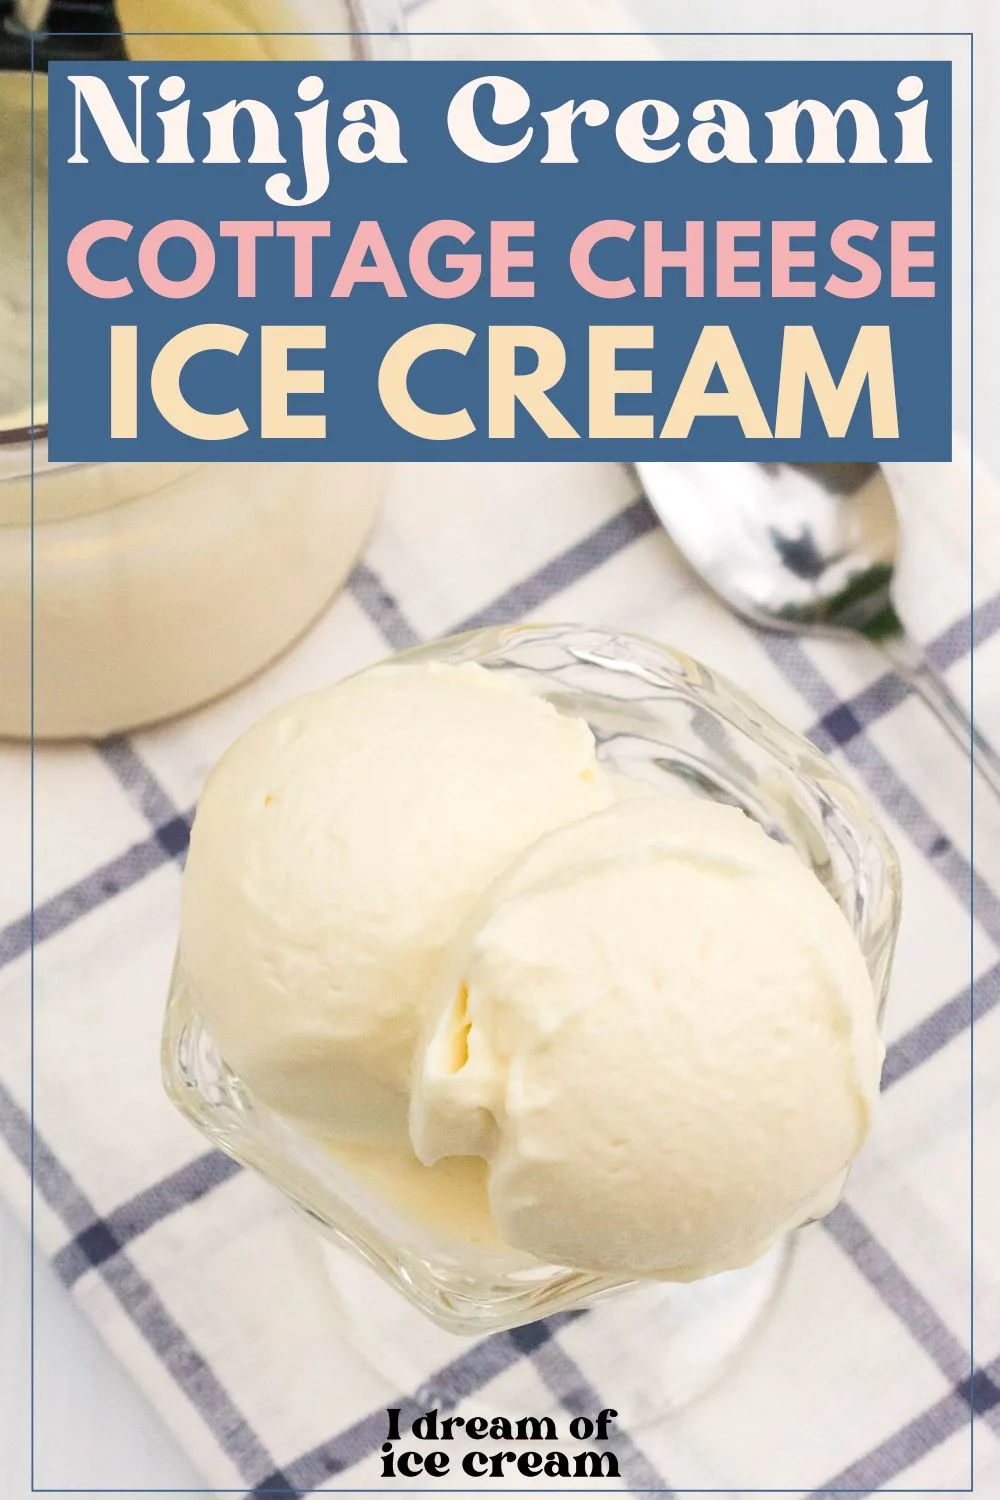 Ninja Creami Cottage Cheese Ice Cream - I Dream of Ice Cream